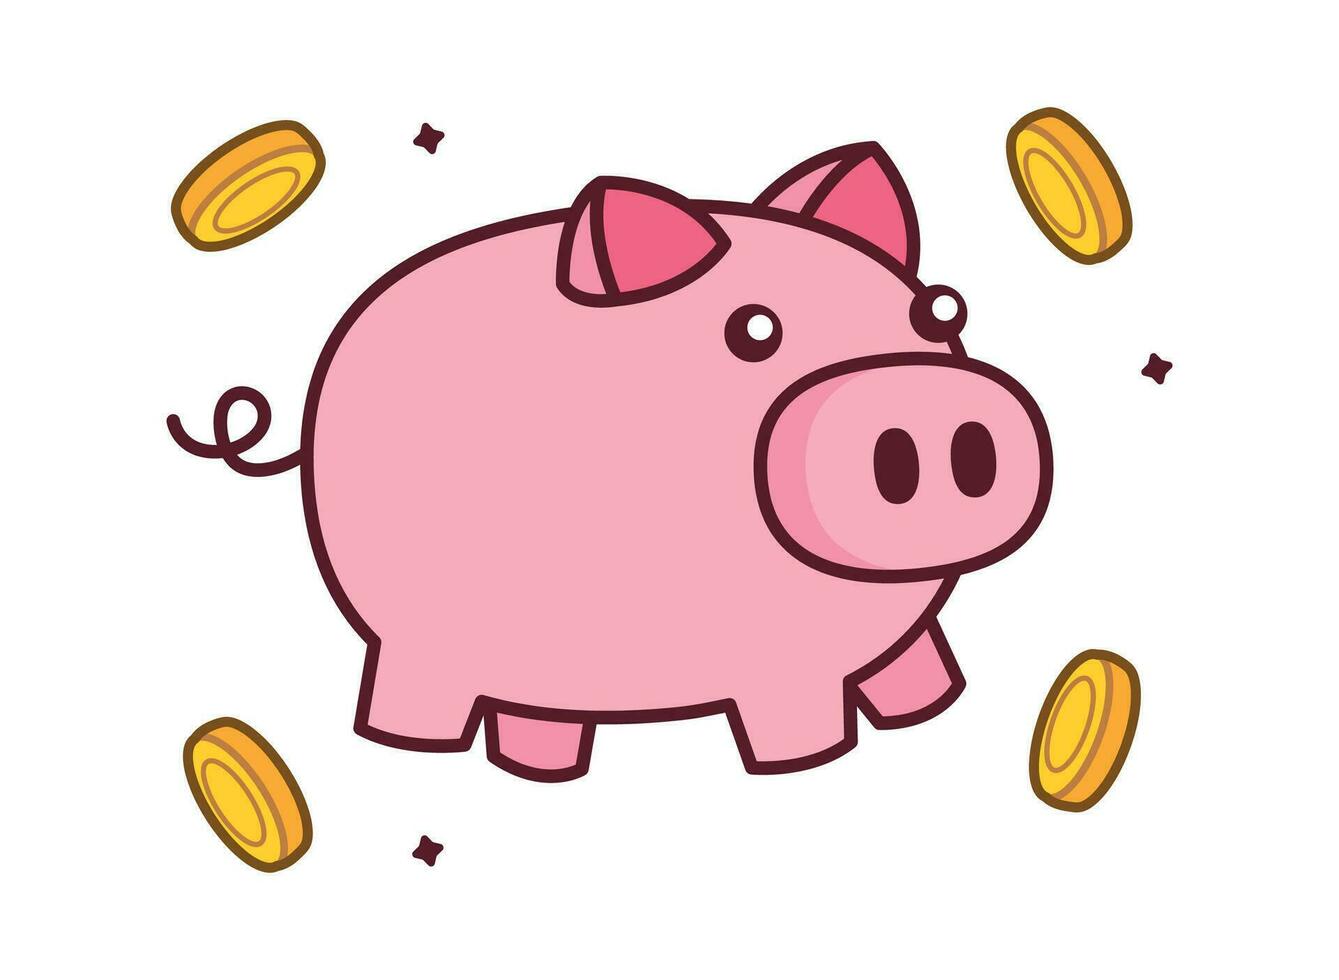 Cute Simple Piggy Bank With Coin Cartoon Clipart Illustration vector